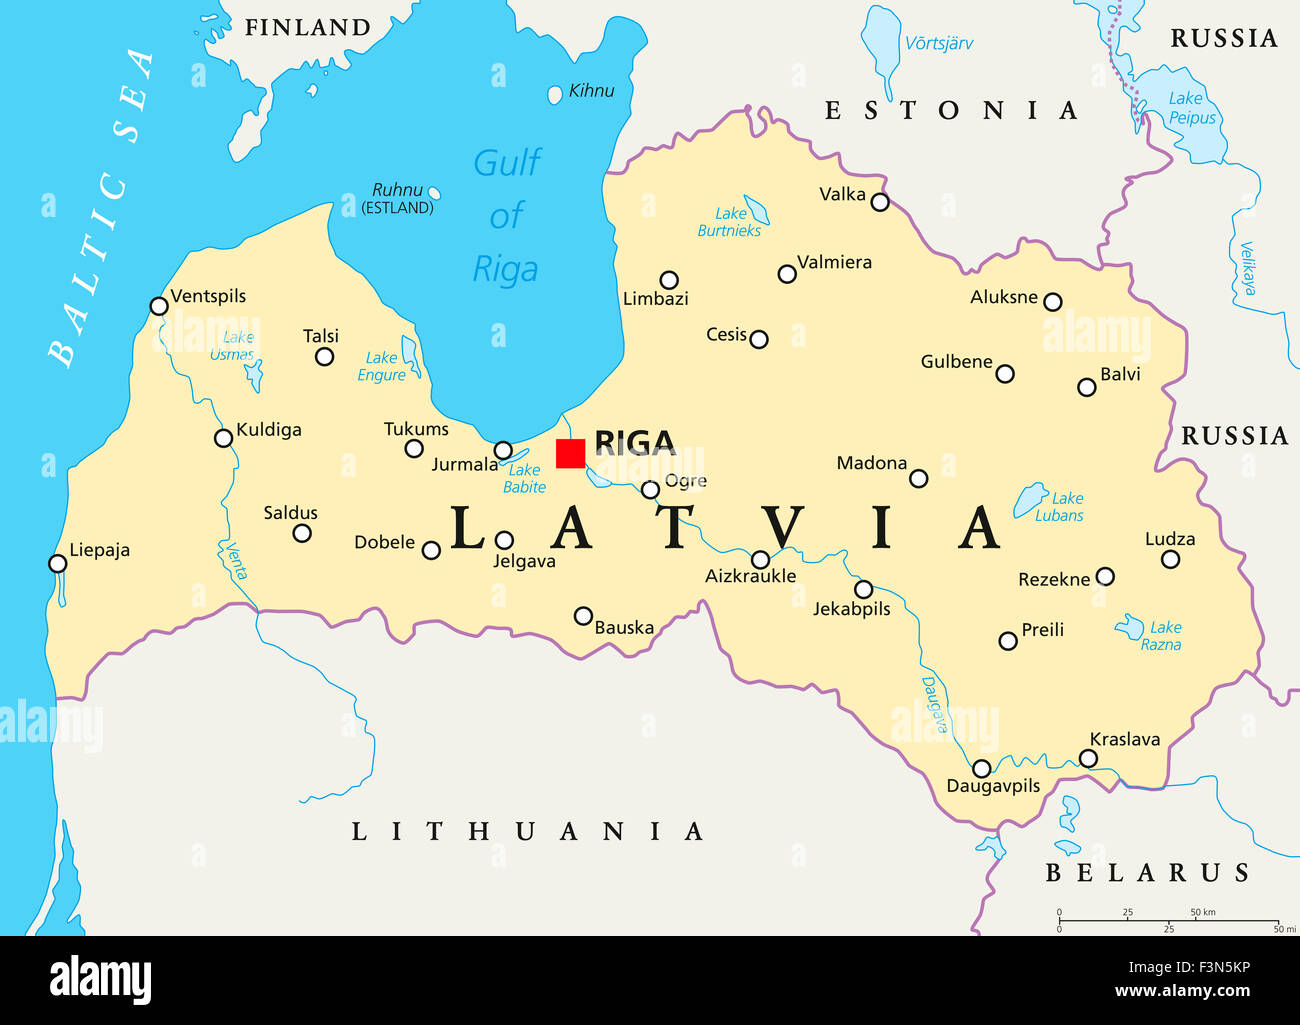 Latvia political map with capital Riga, national borders, important